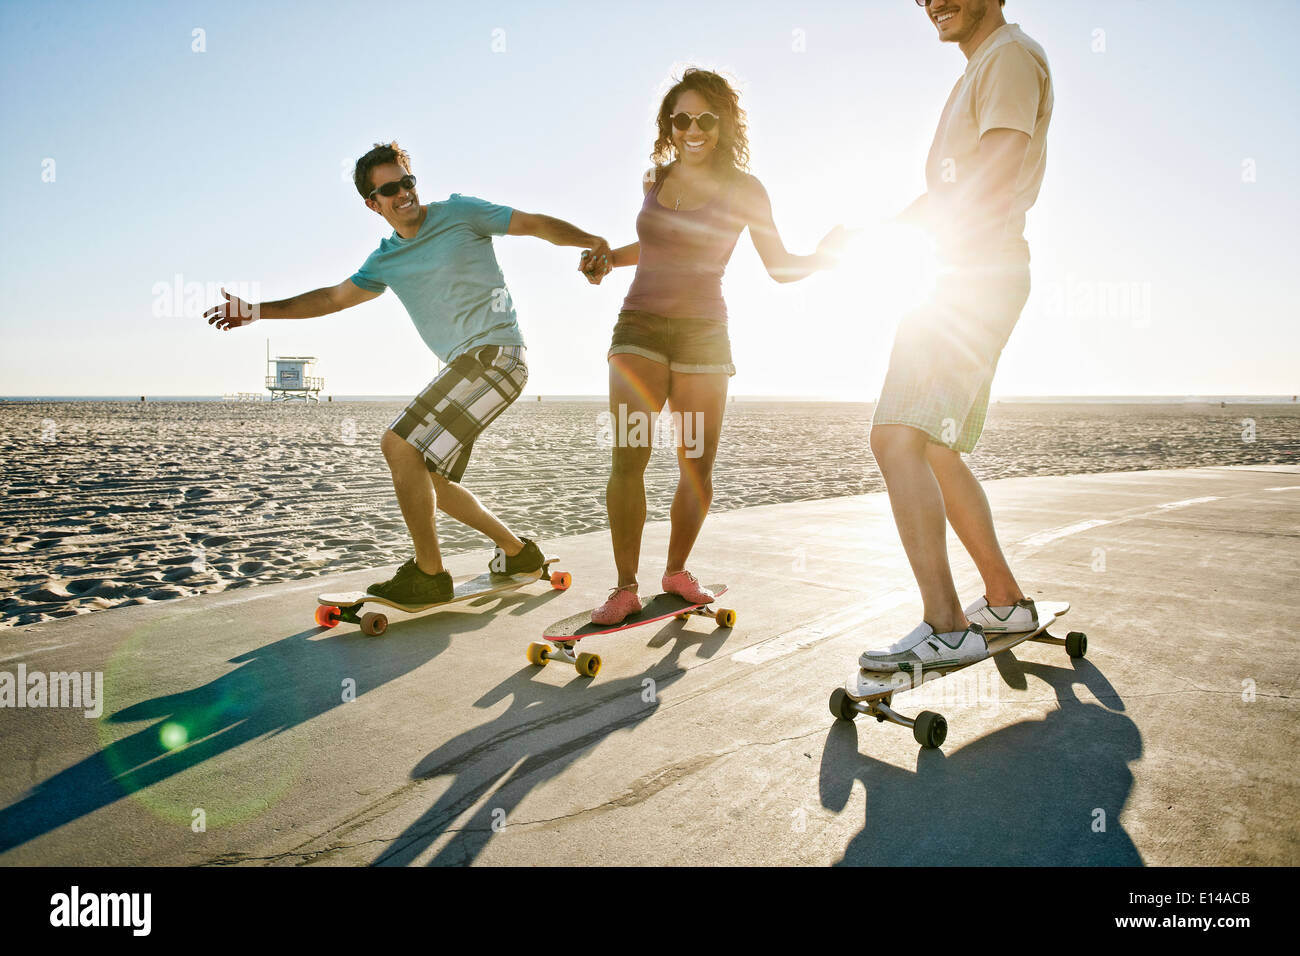 Friends riding longboards on beach Stock Photo